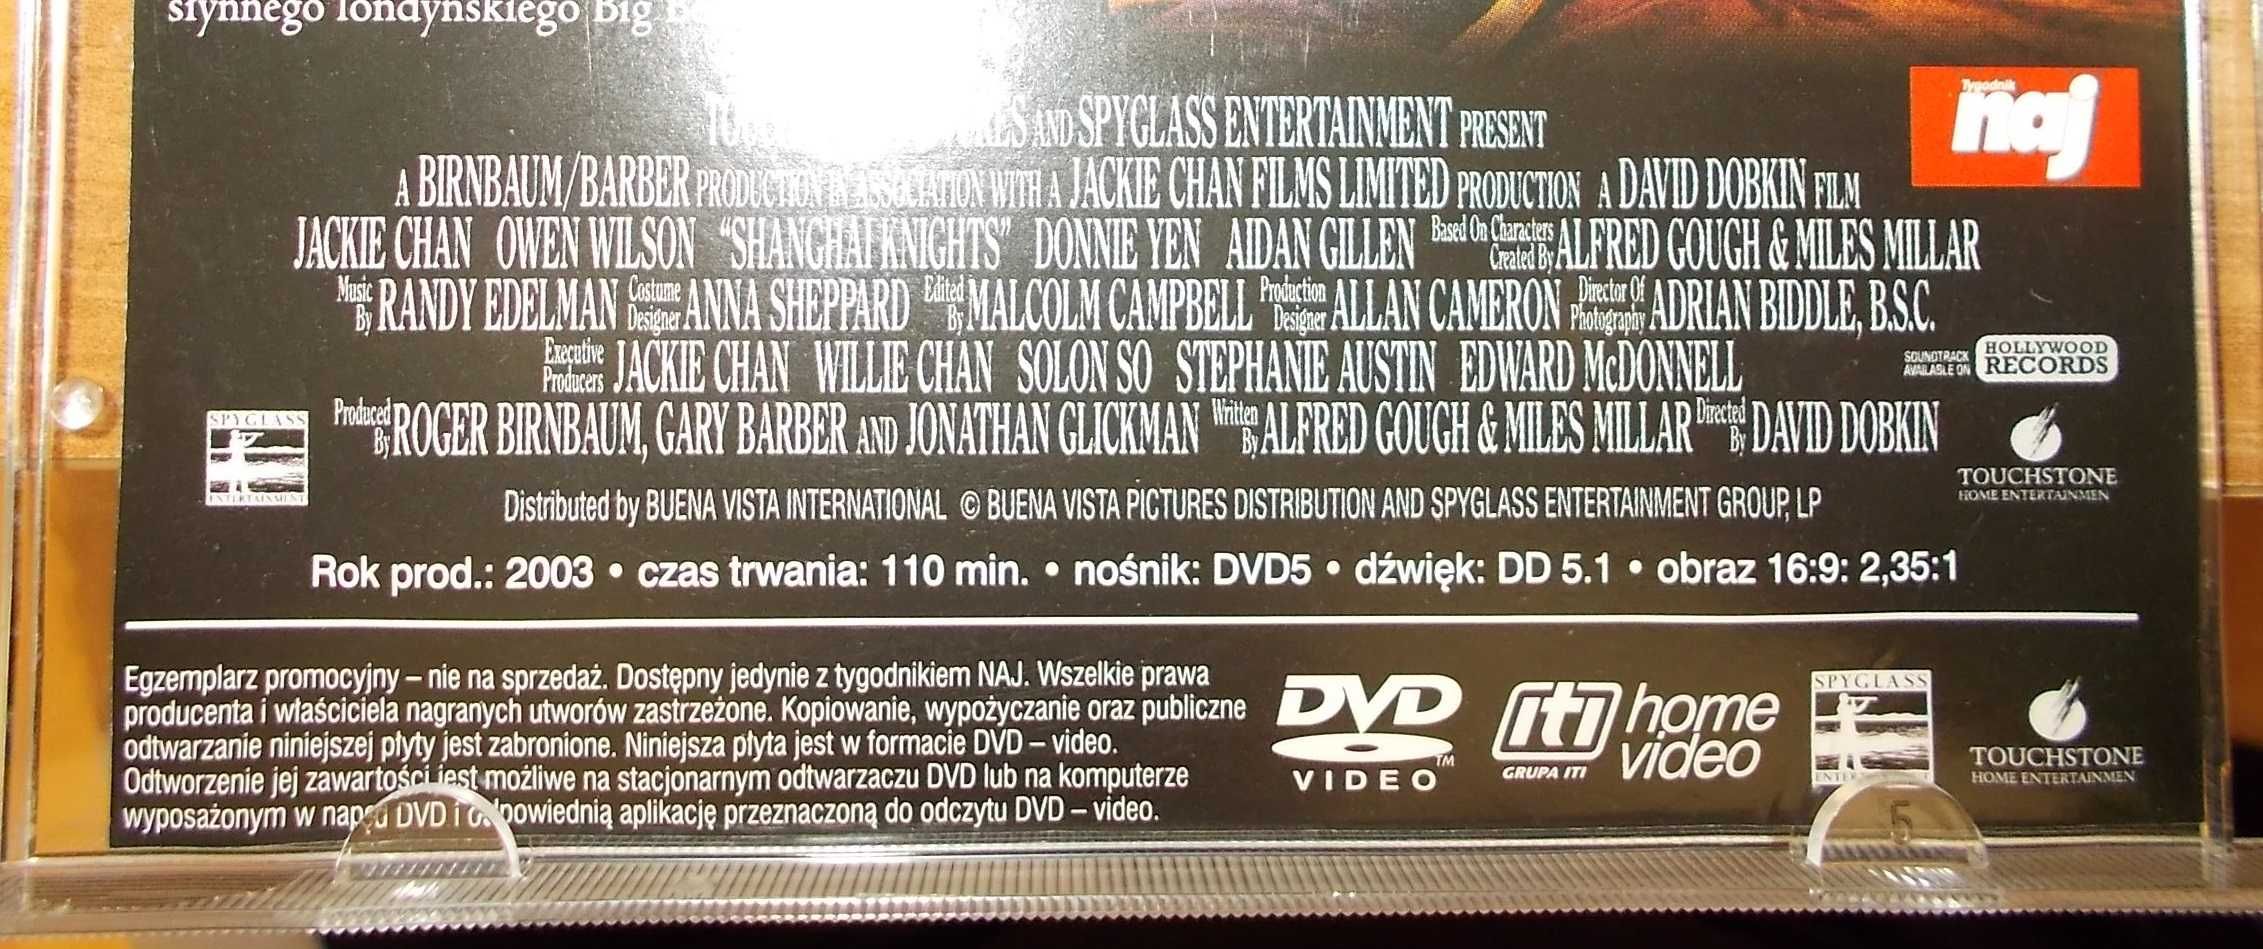 Film DVD - Rycerze z Szanghaju - (2003r.)